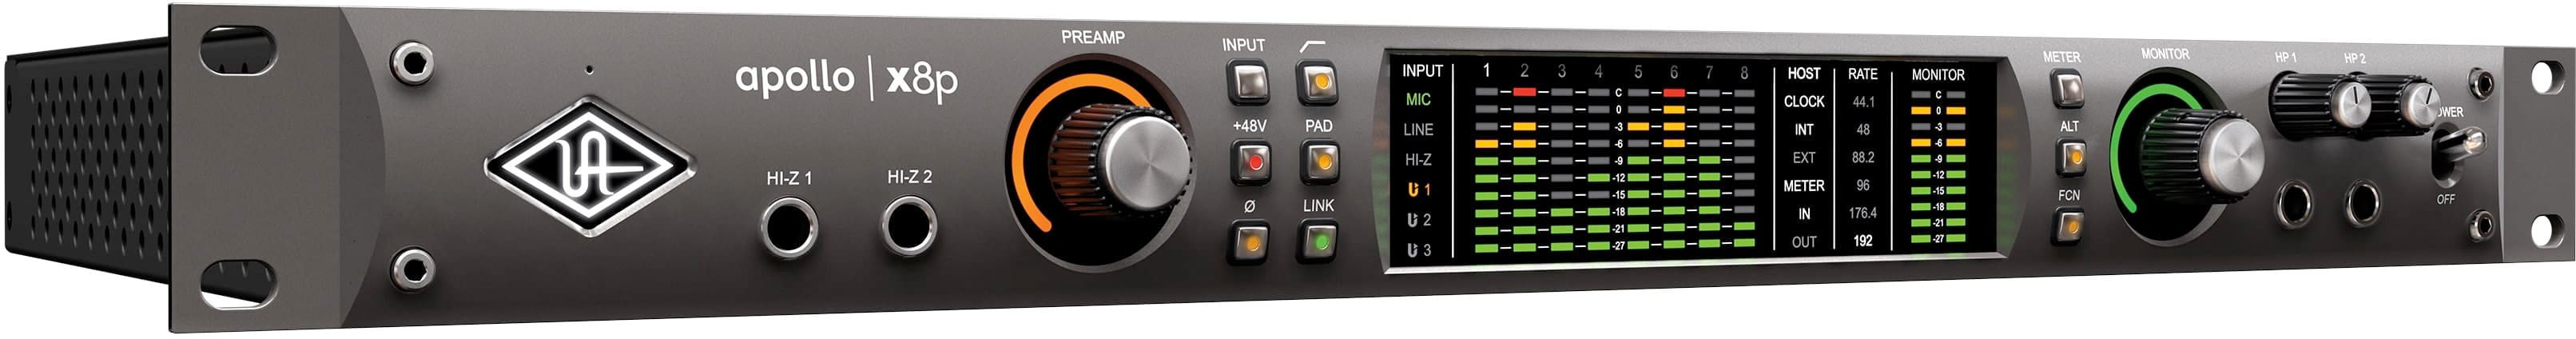 Universal Audio Apollo X8p - Thunderbolt audio interface - Main picture